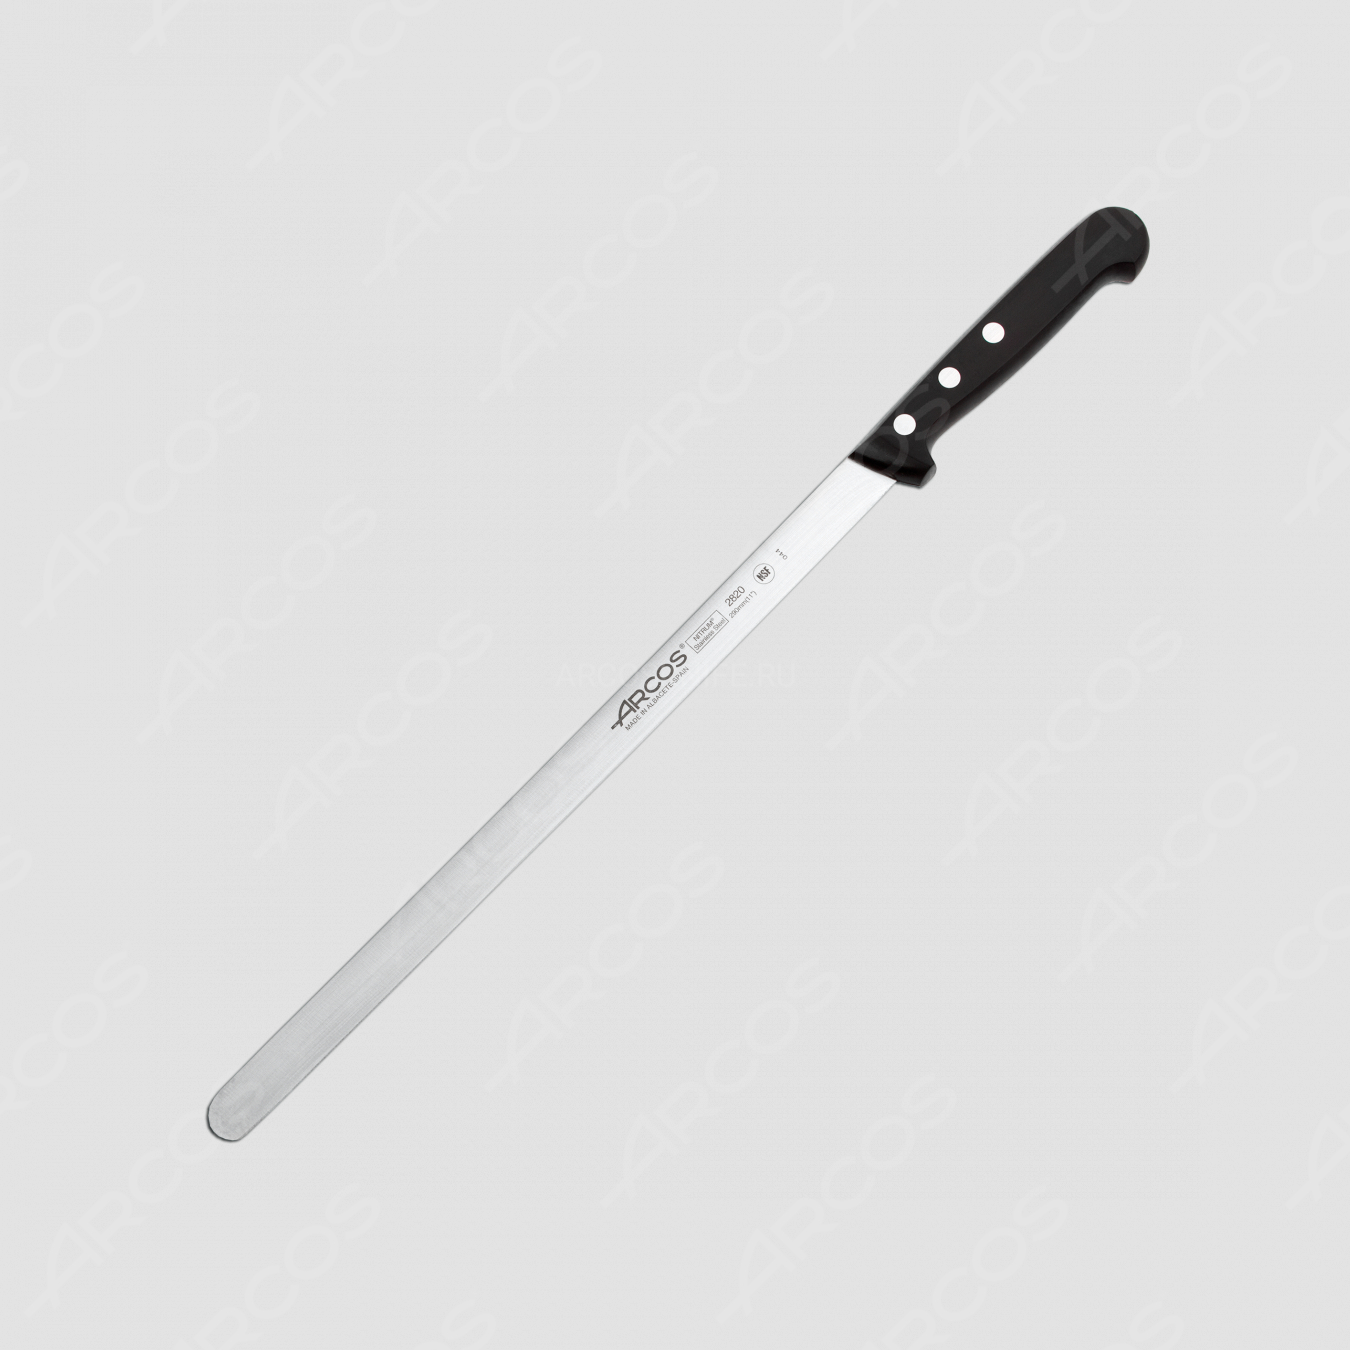 Нож кухонный для нарезки филе 29 см, серия Universal, ARCOS, Испания